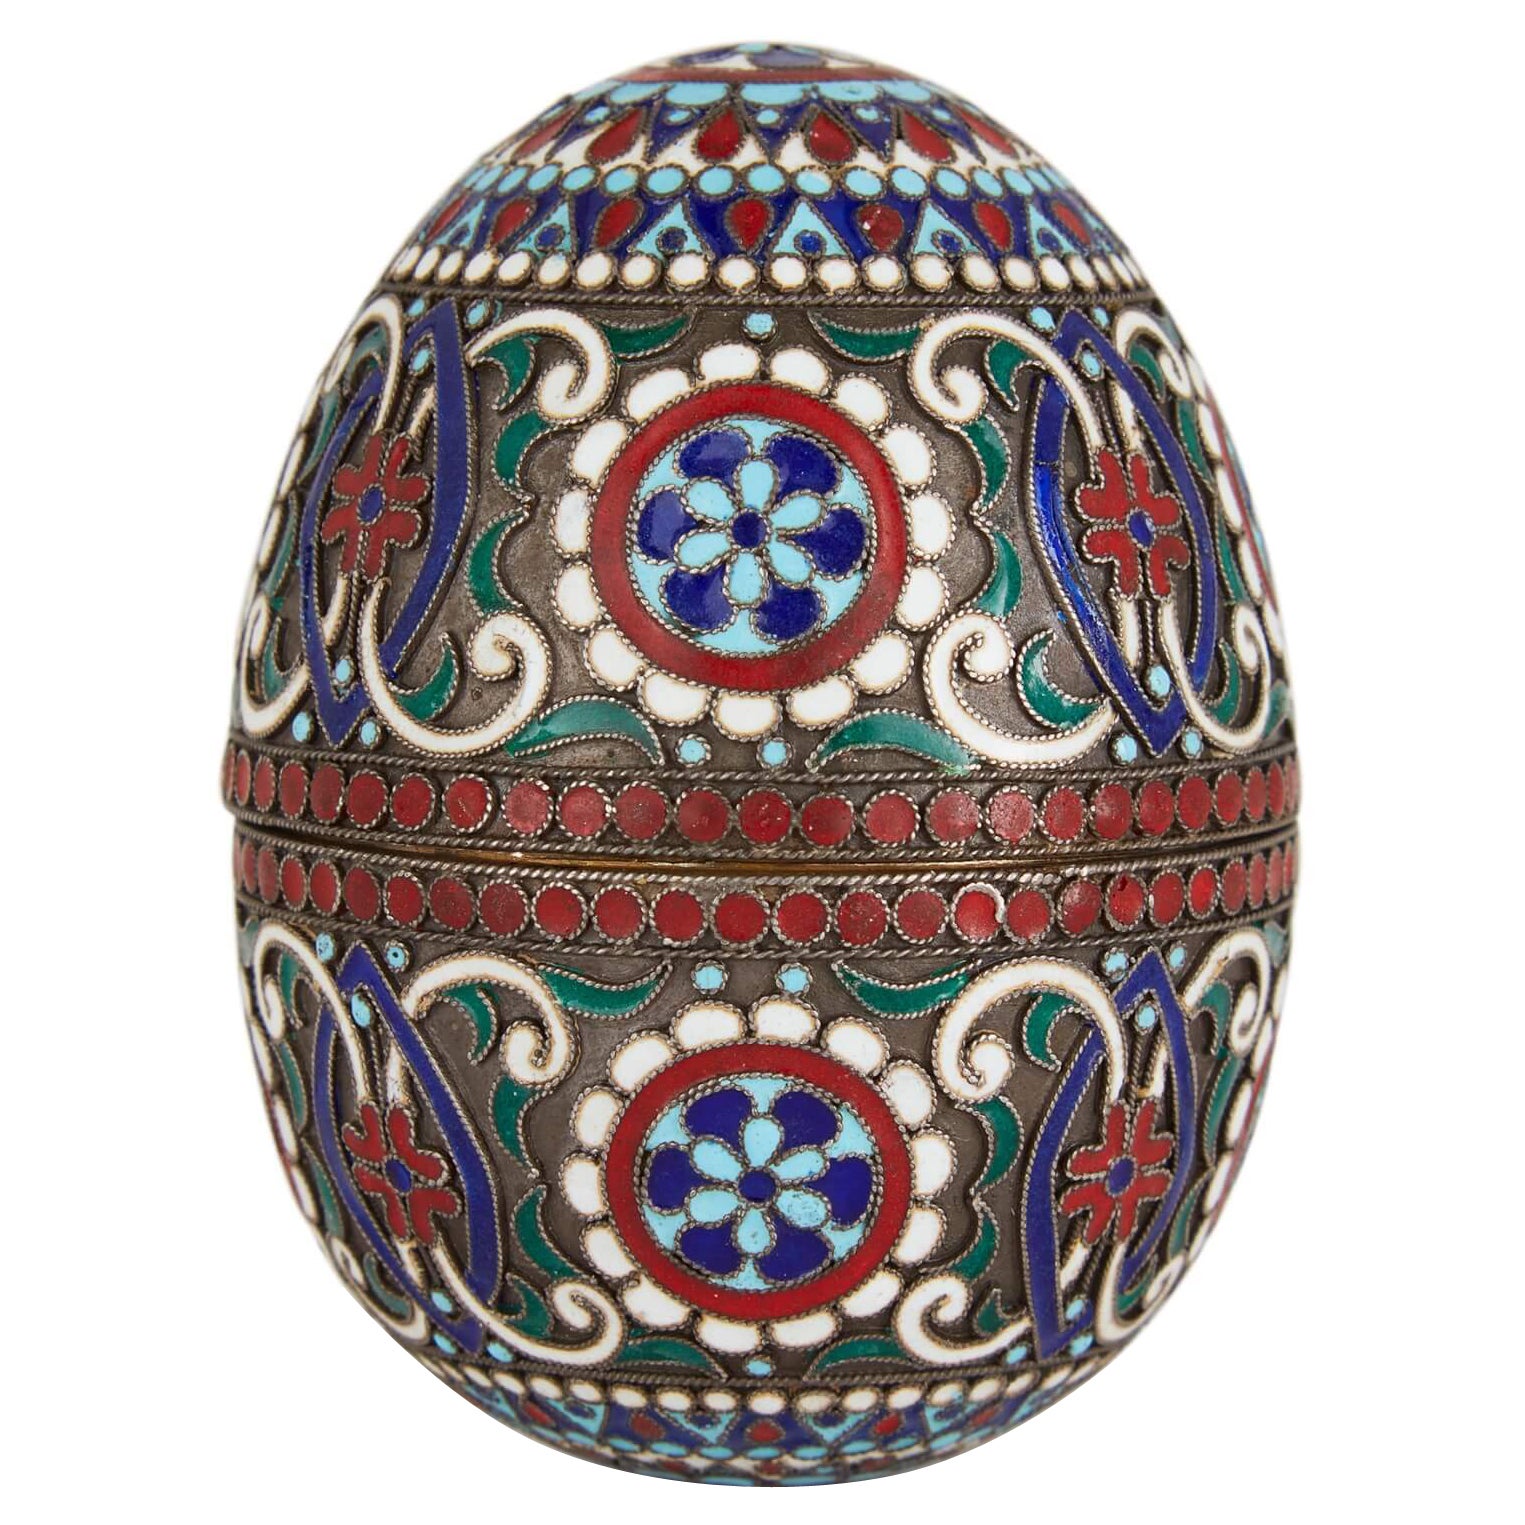 Russian Cloisonné Enamel and Silver Gilt Egg